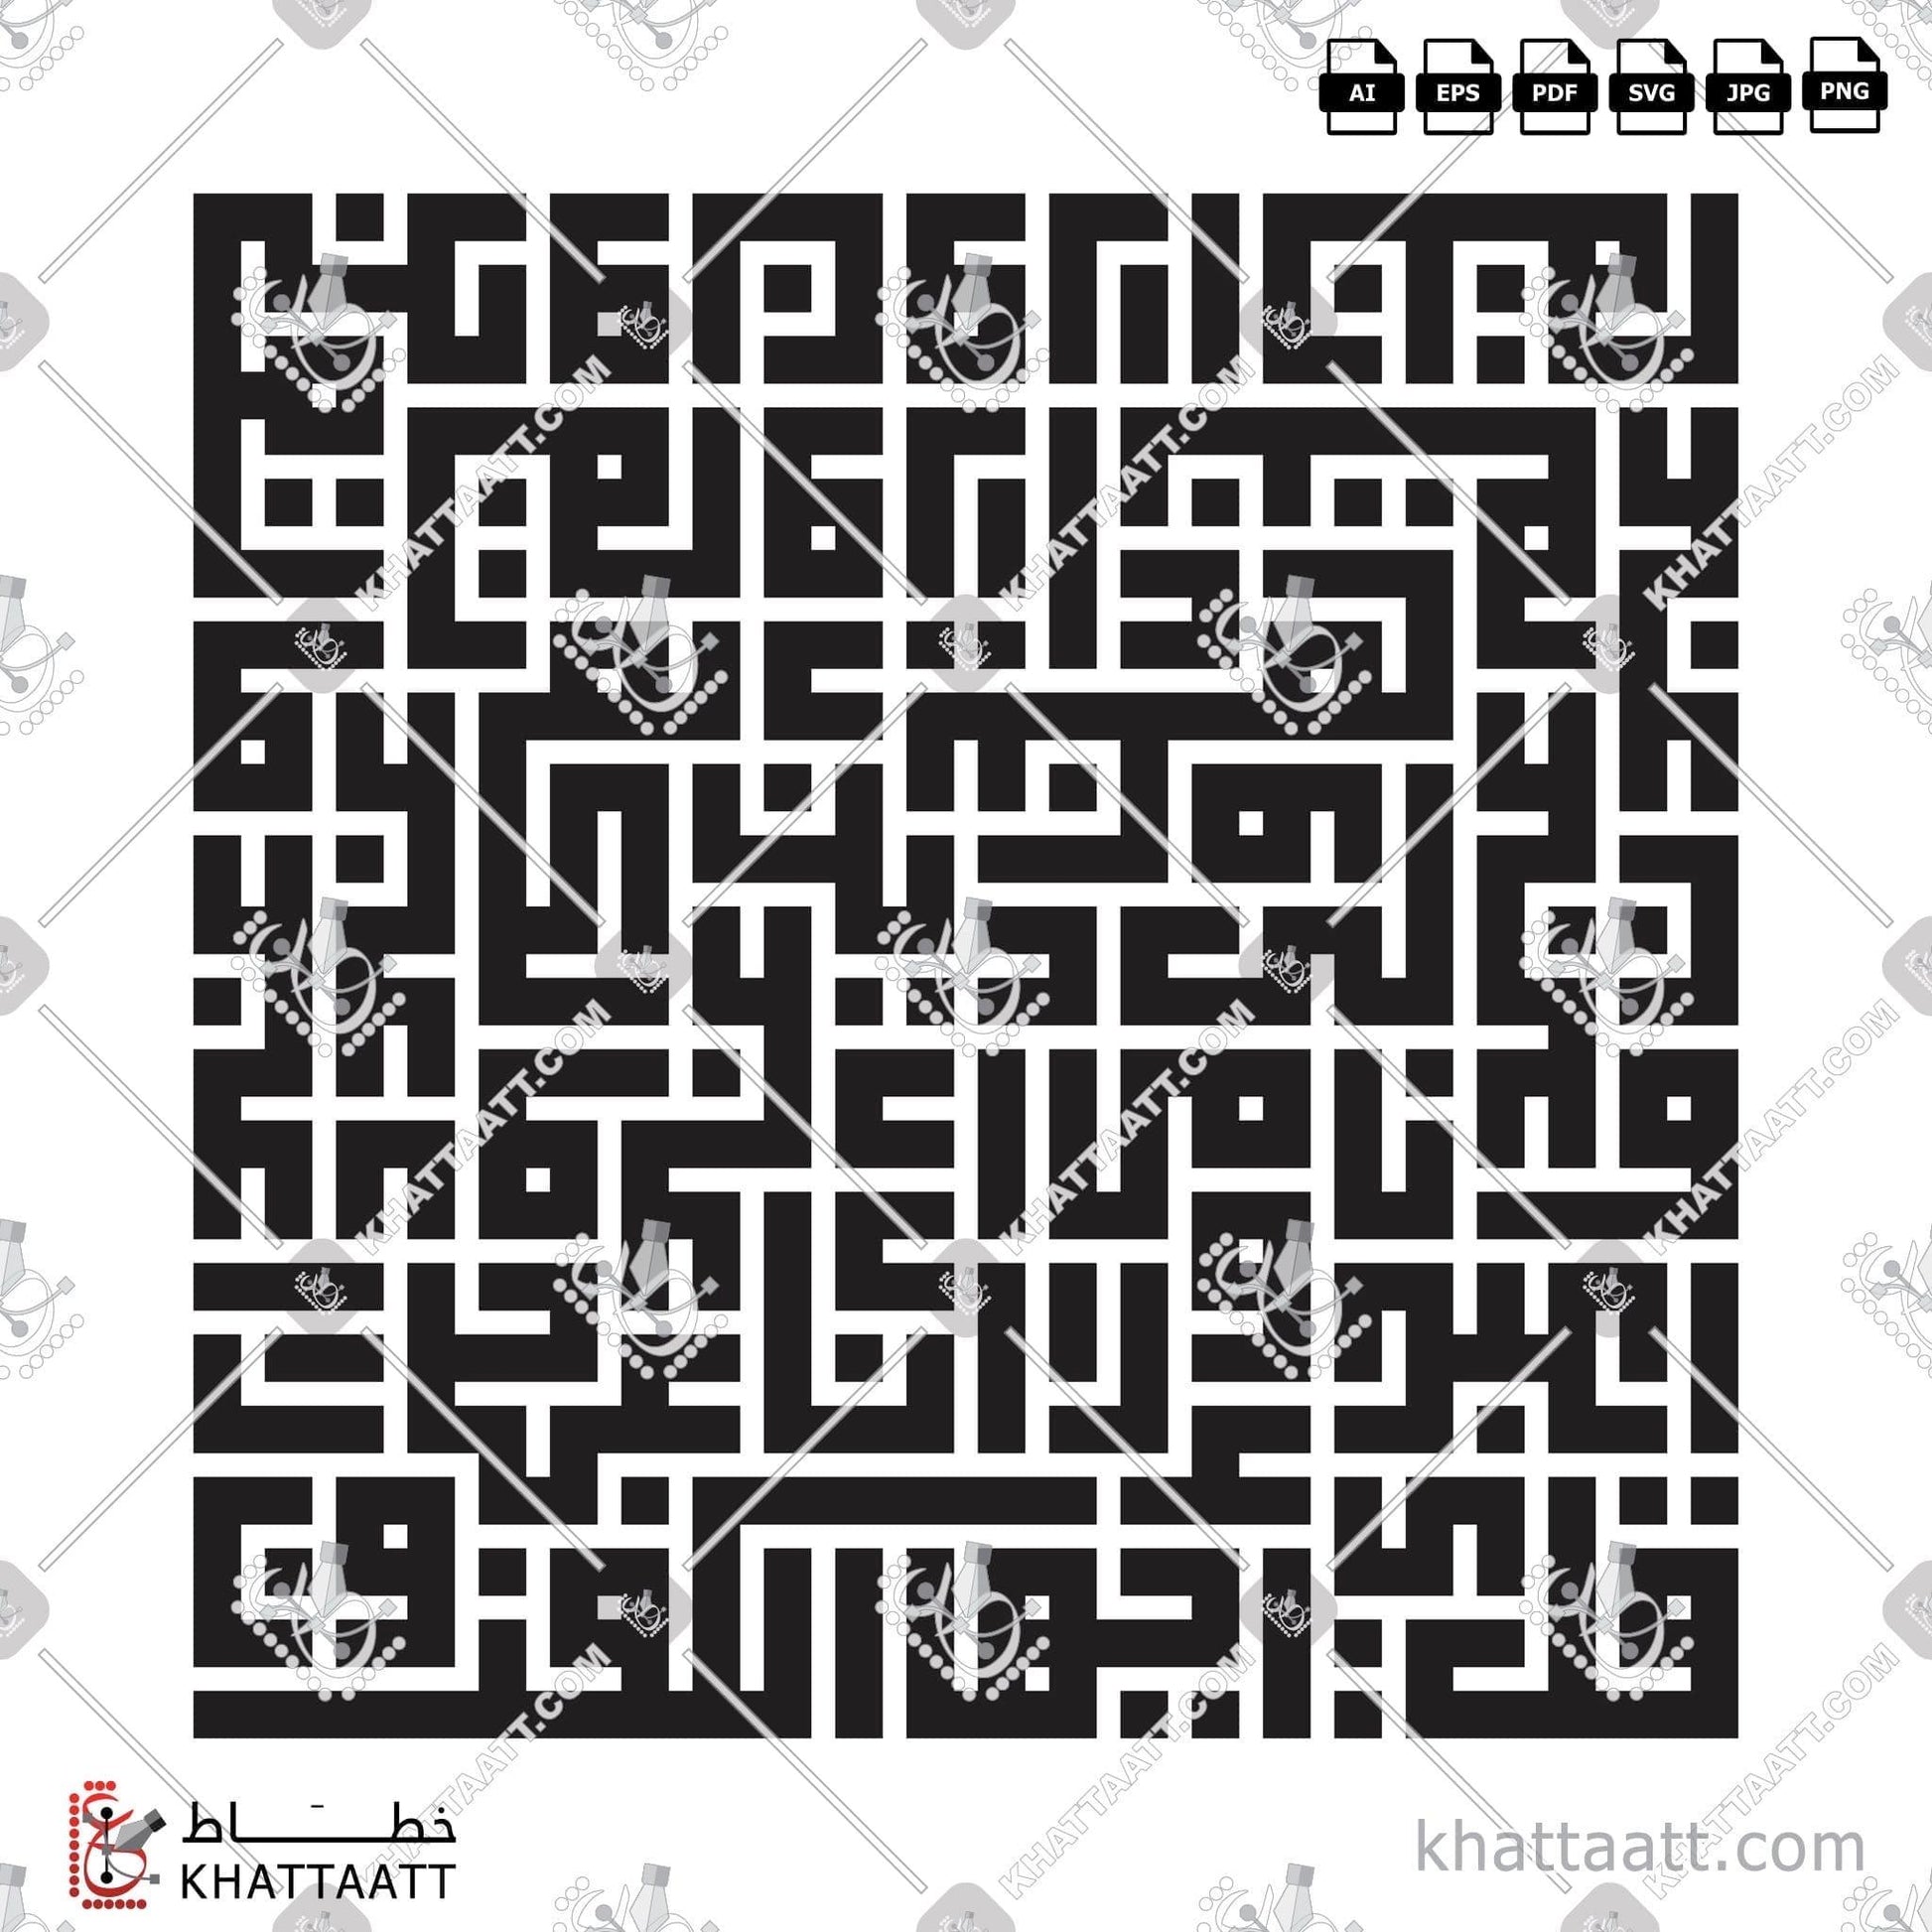 Digital Arabic Calligraphy Vector of Surat Al-Kafirun - سورة الكافرون in Kufi - الخط الكوفي